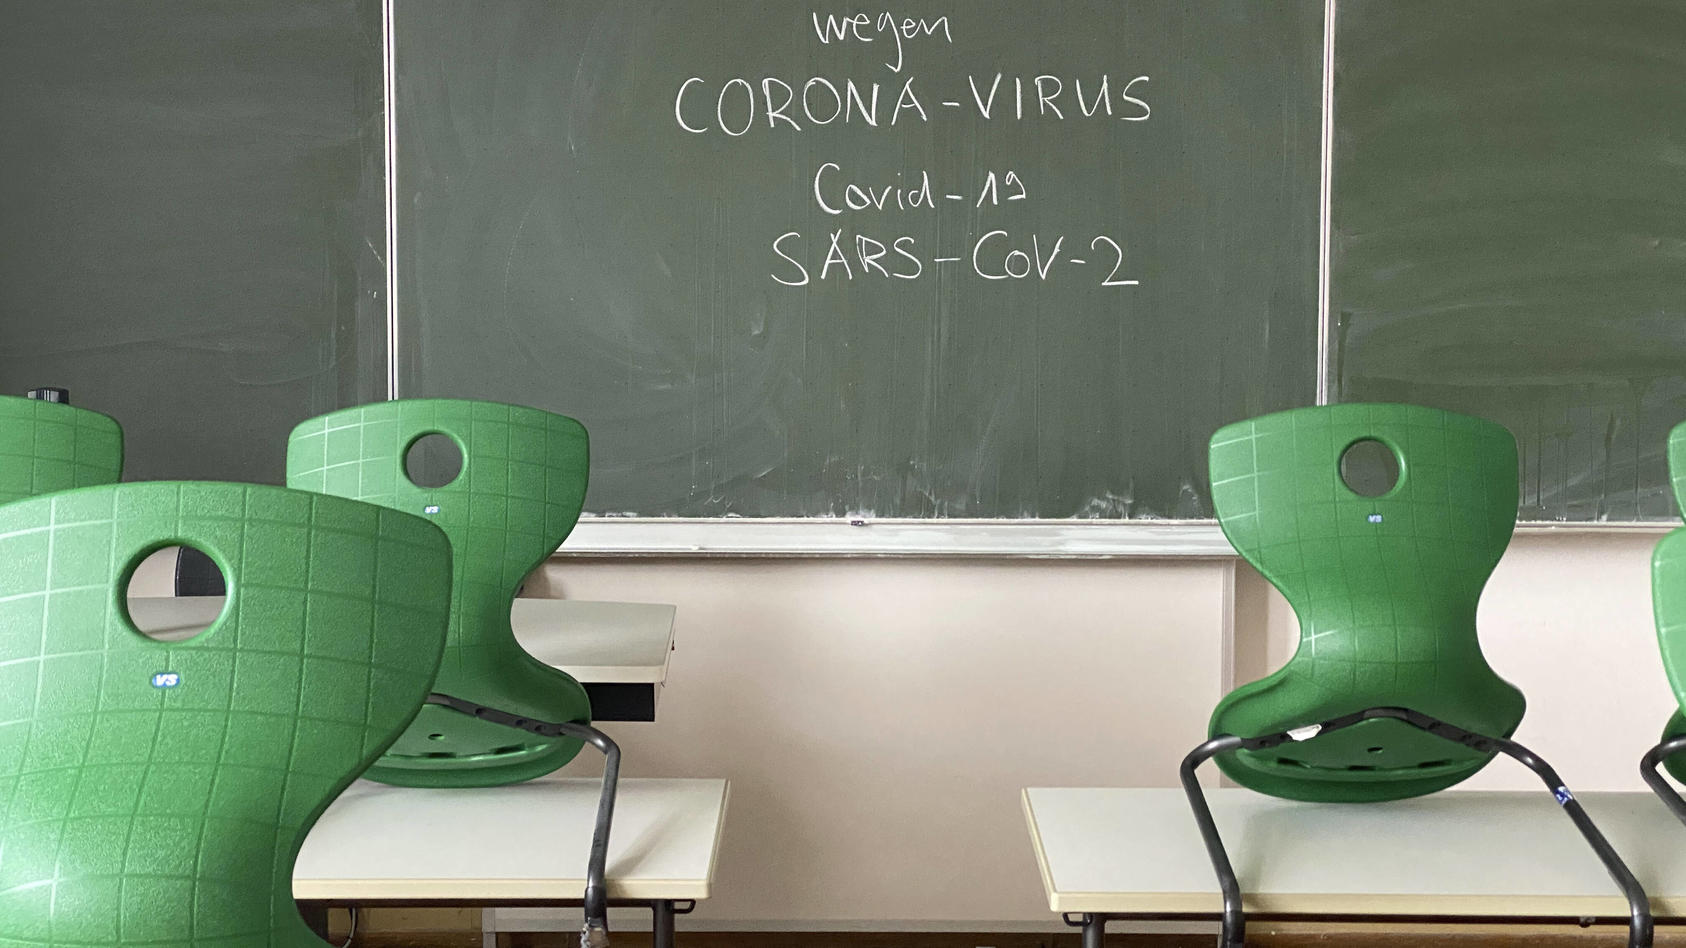 Schule entfällt wegen Corona-Virus, Covid-19, SARS-CoV-2, leeres Klassenzimmer, Deutschland Schule entfällt wegen Coron